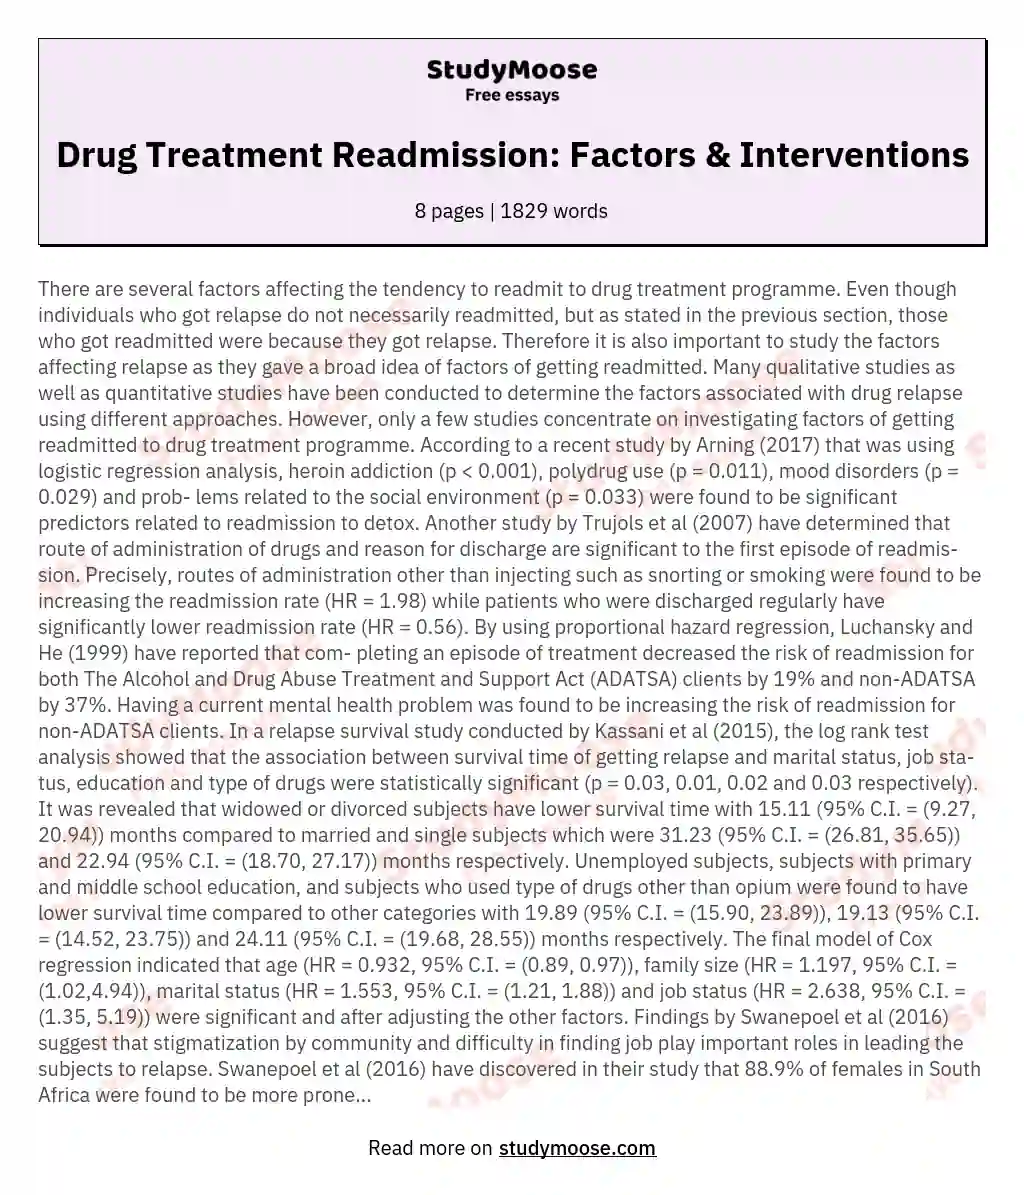 Drug Treatment Readmission: Factors & Interventions essay